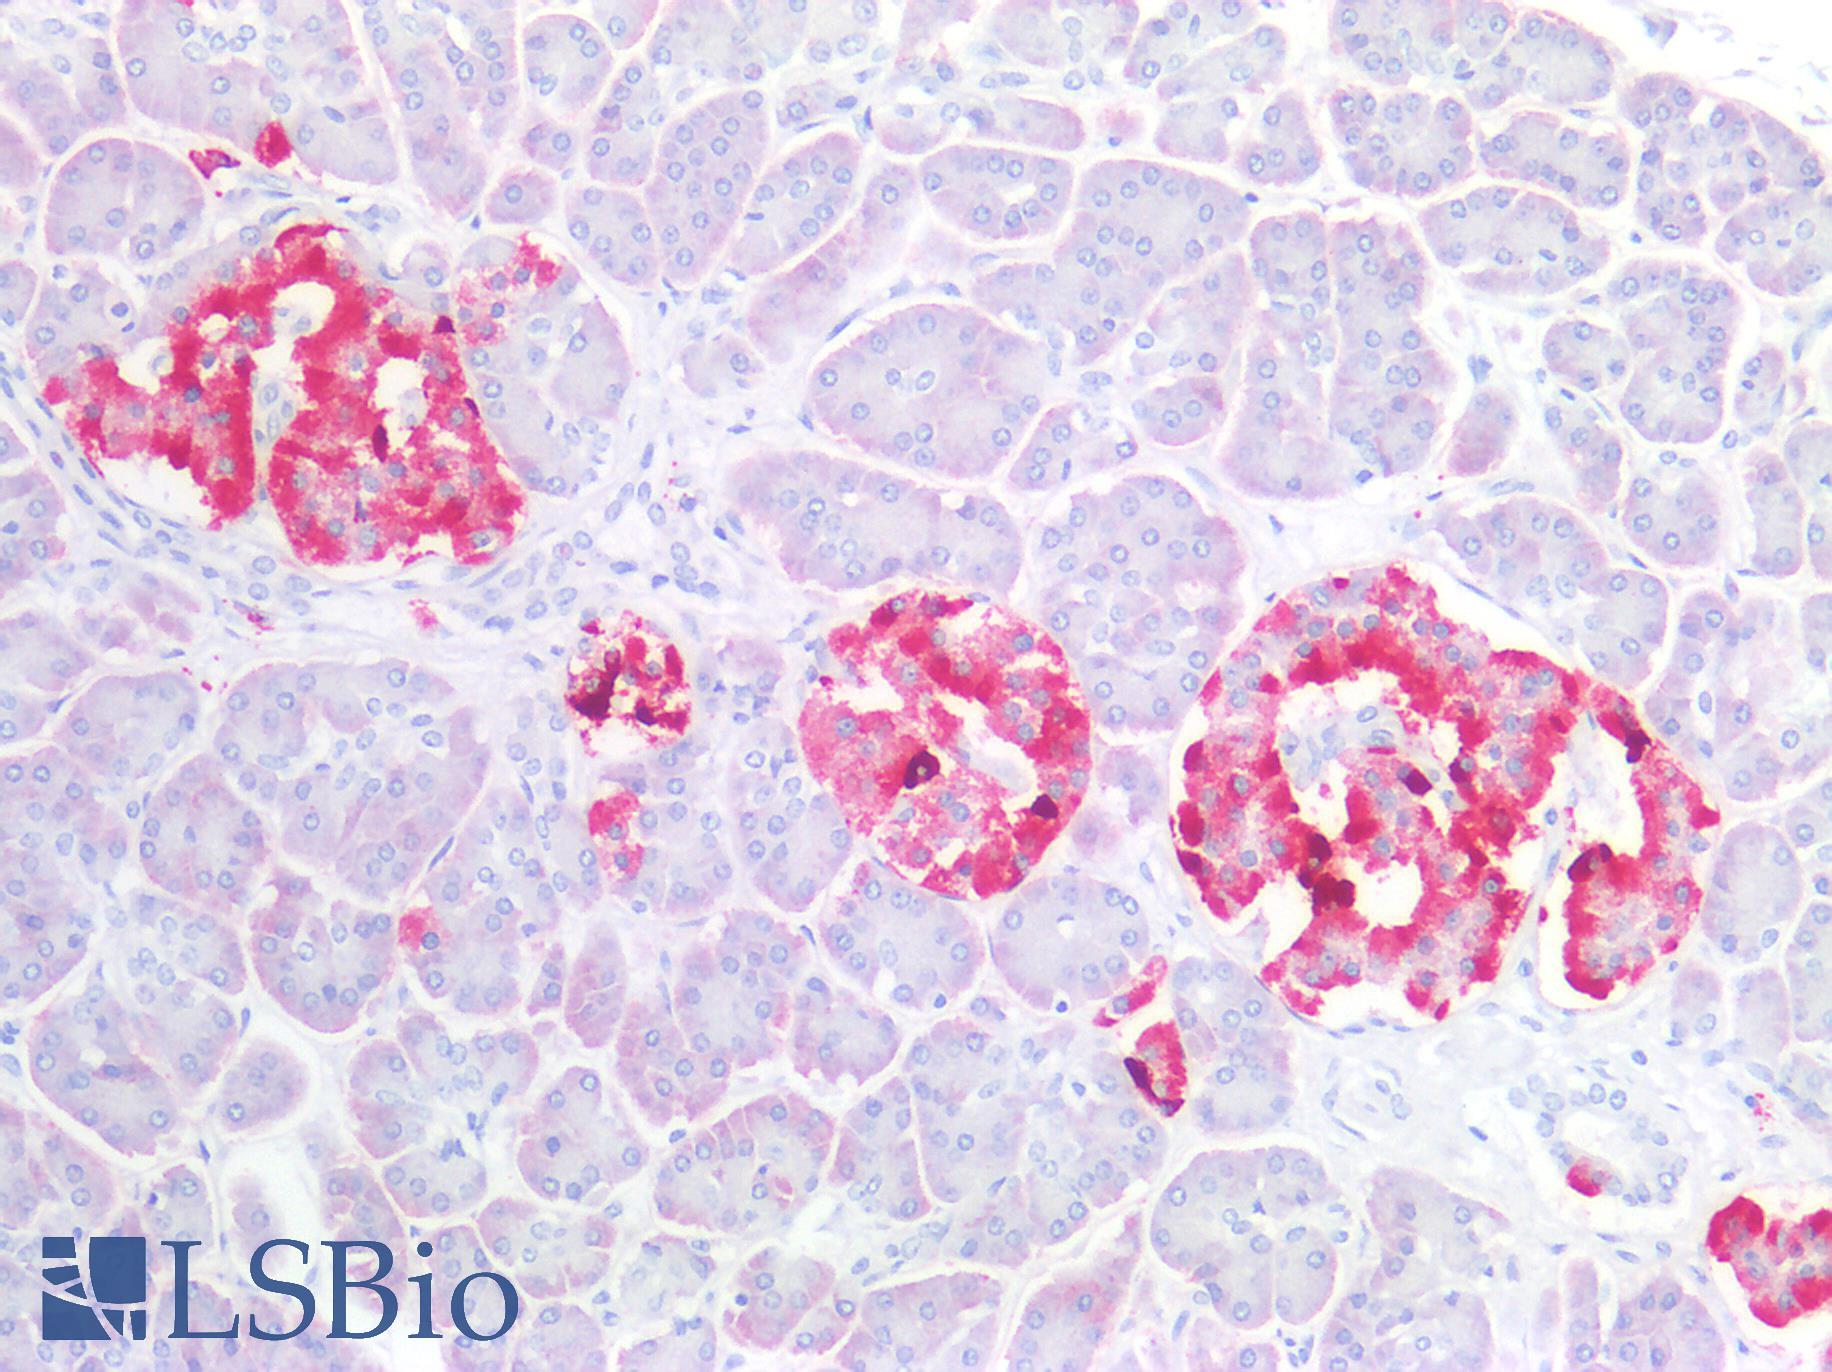 CHGA / Chromogranin A Antibody - Human Pancreas, Islets of Langerhans: Formalin-Fixed, Paraffin-Embedded (FFPE)